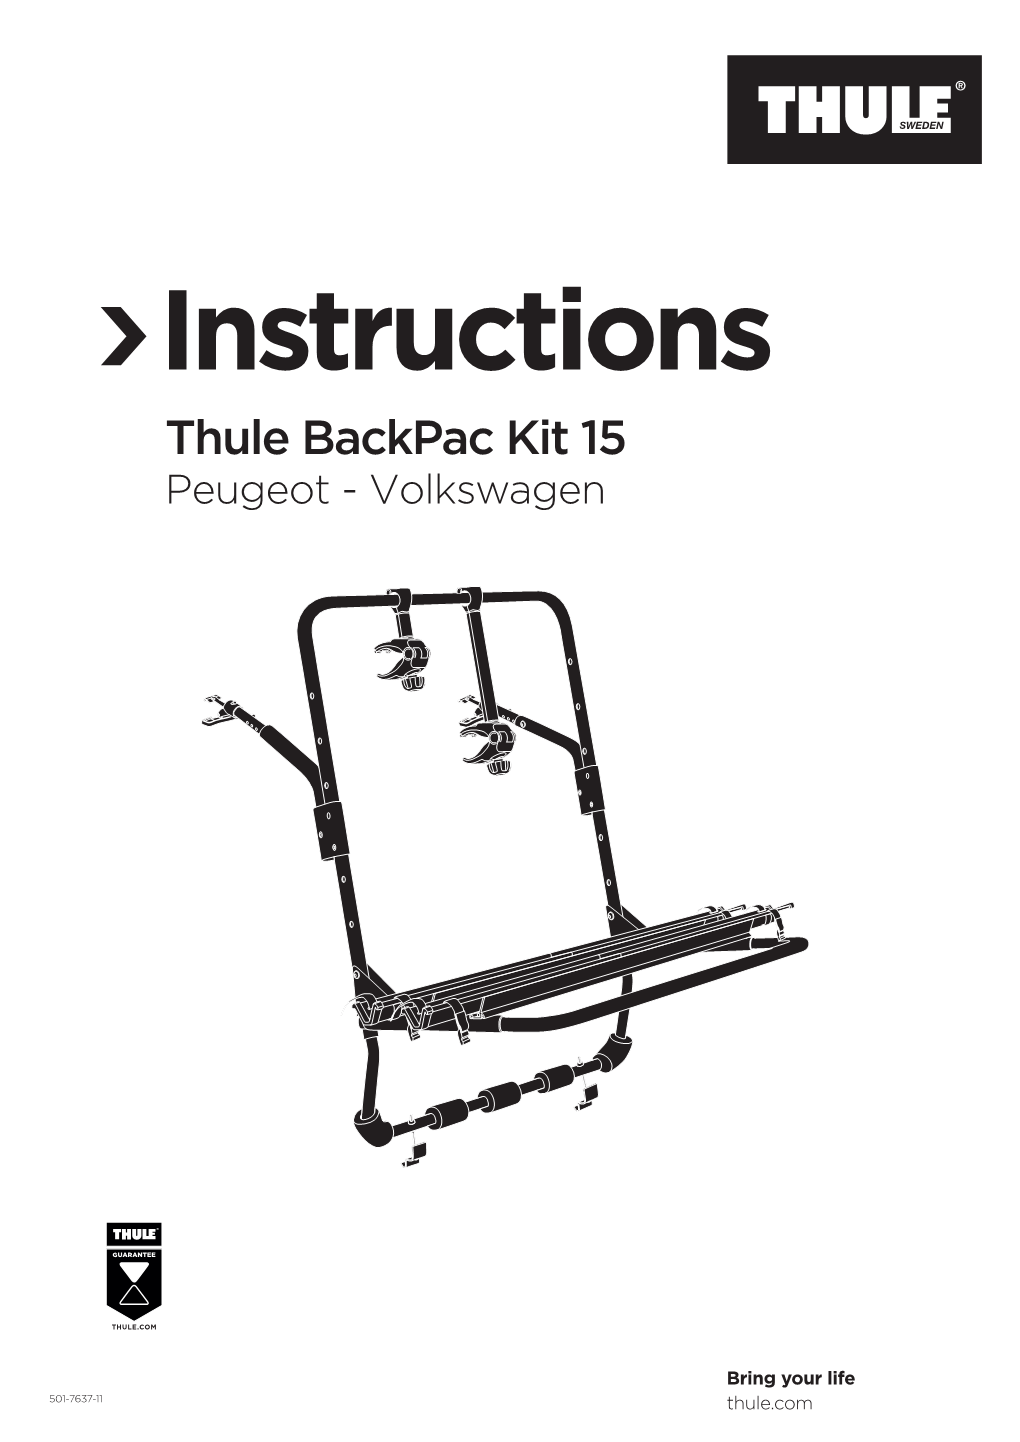 Thule Backpac Kit 15 Peugeot - Volkswagen